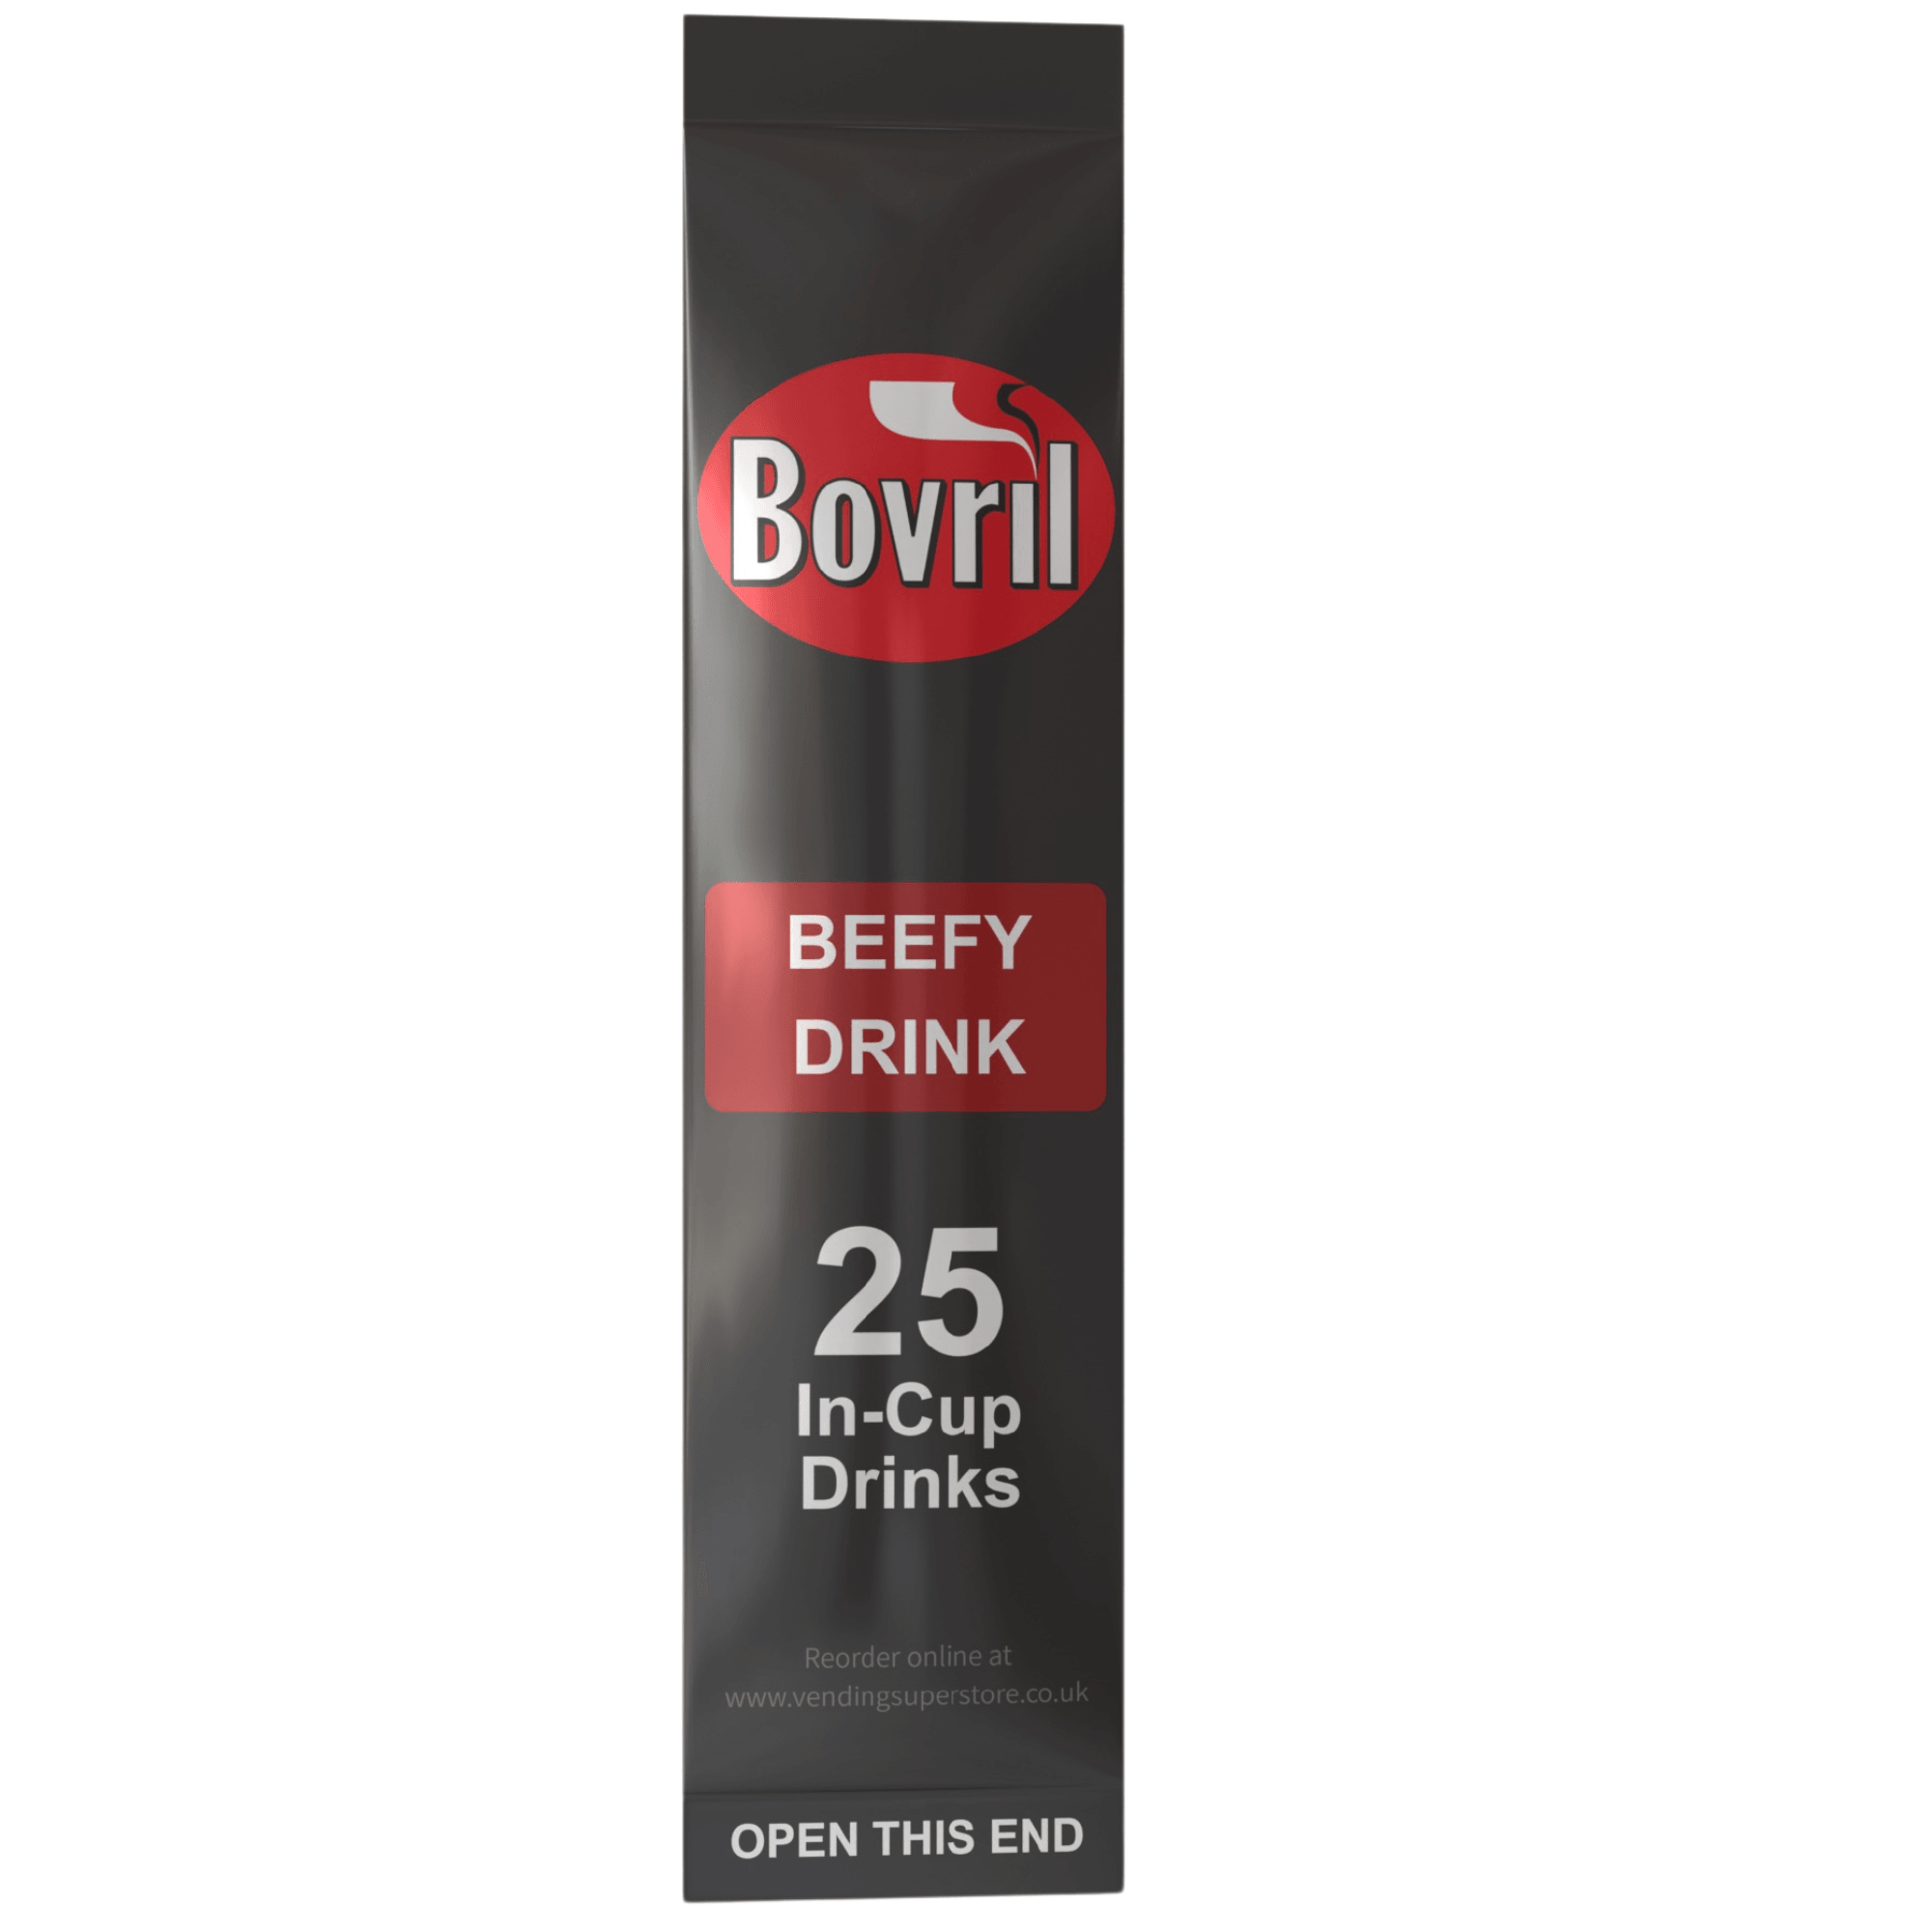 Incup Vending Drinks - Bovril Beefy Drink - Case Of 300 Cups - Vending Superstore